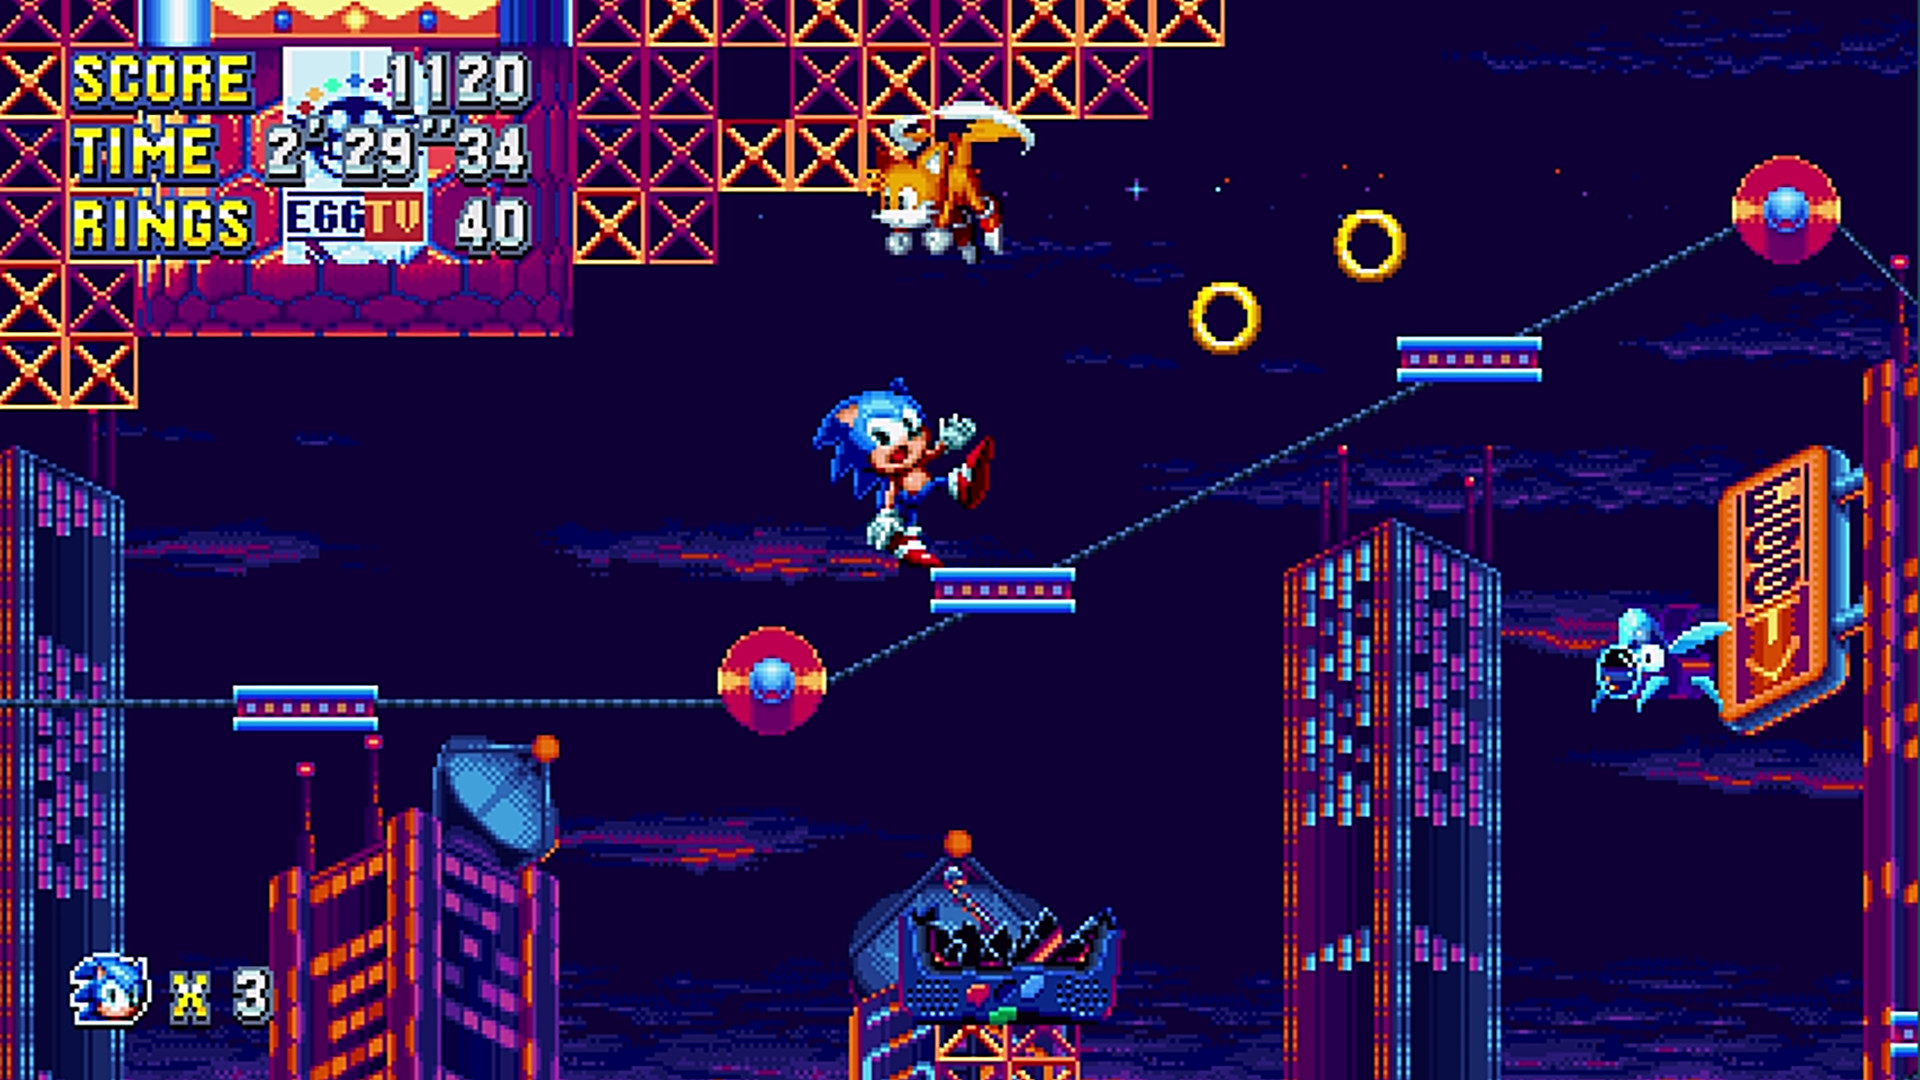 Sonic the Hedgehog jumps to a platform